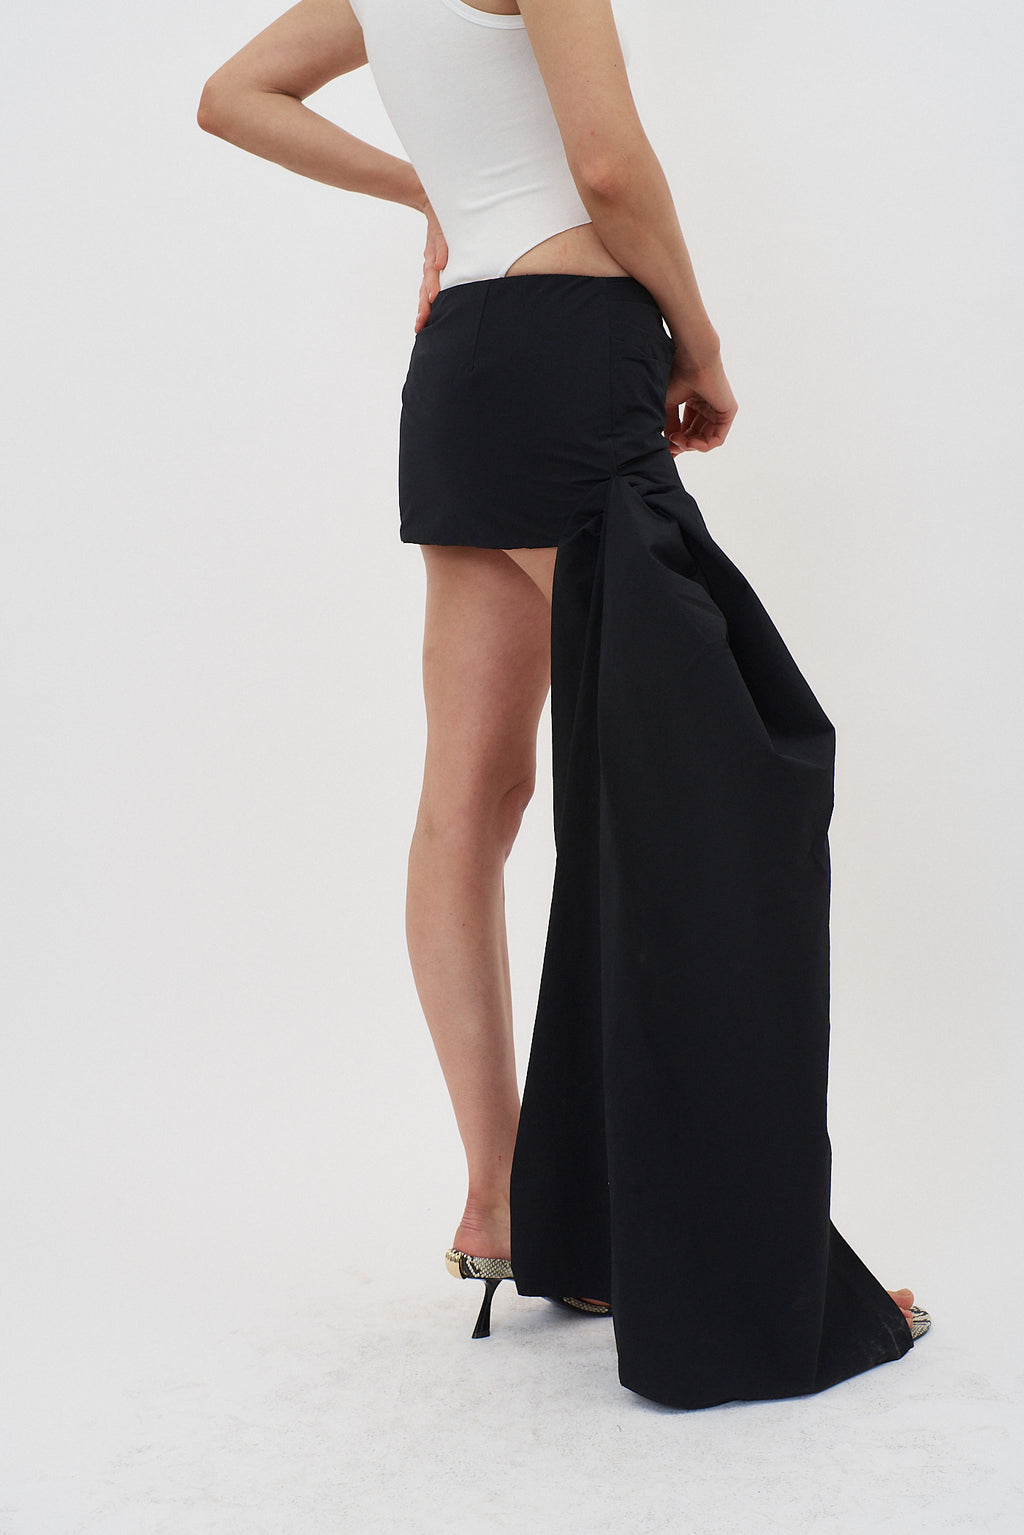 Draped Bustle Black Micro Skirt